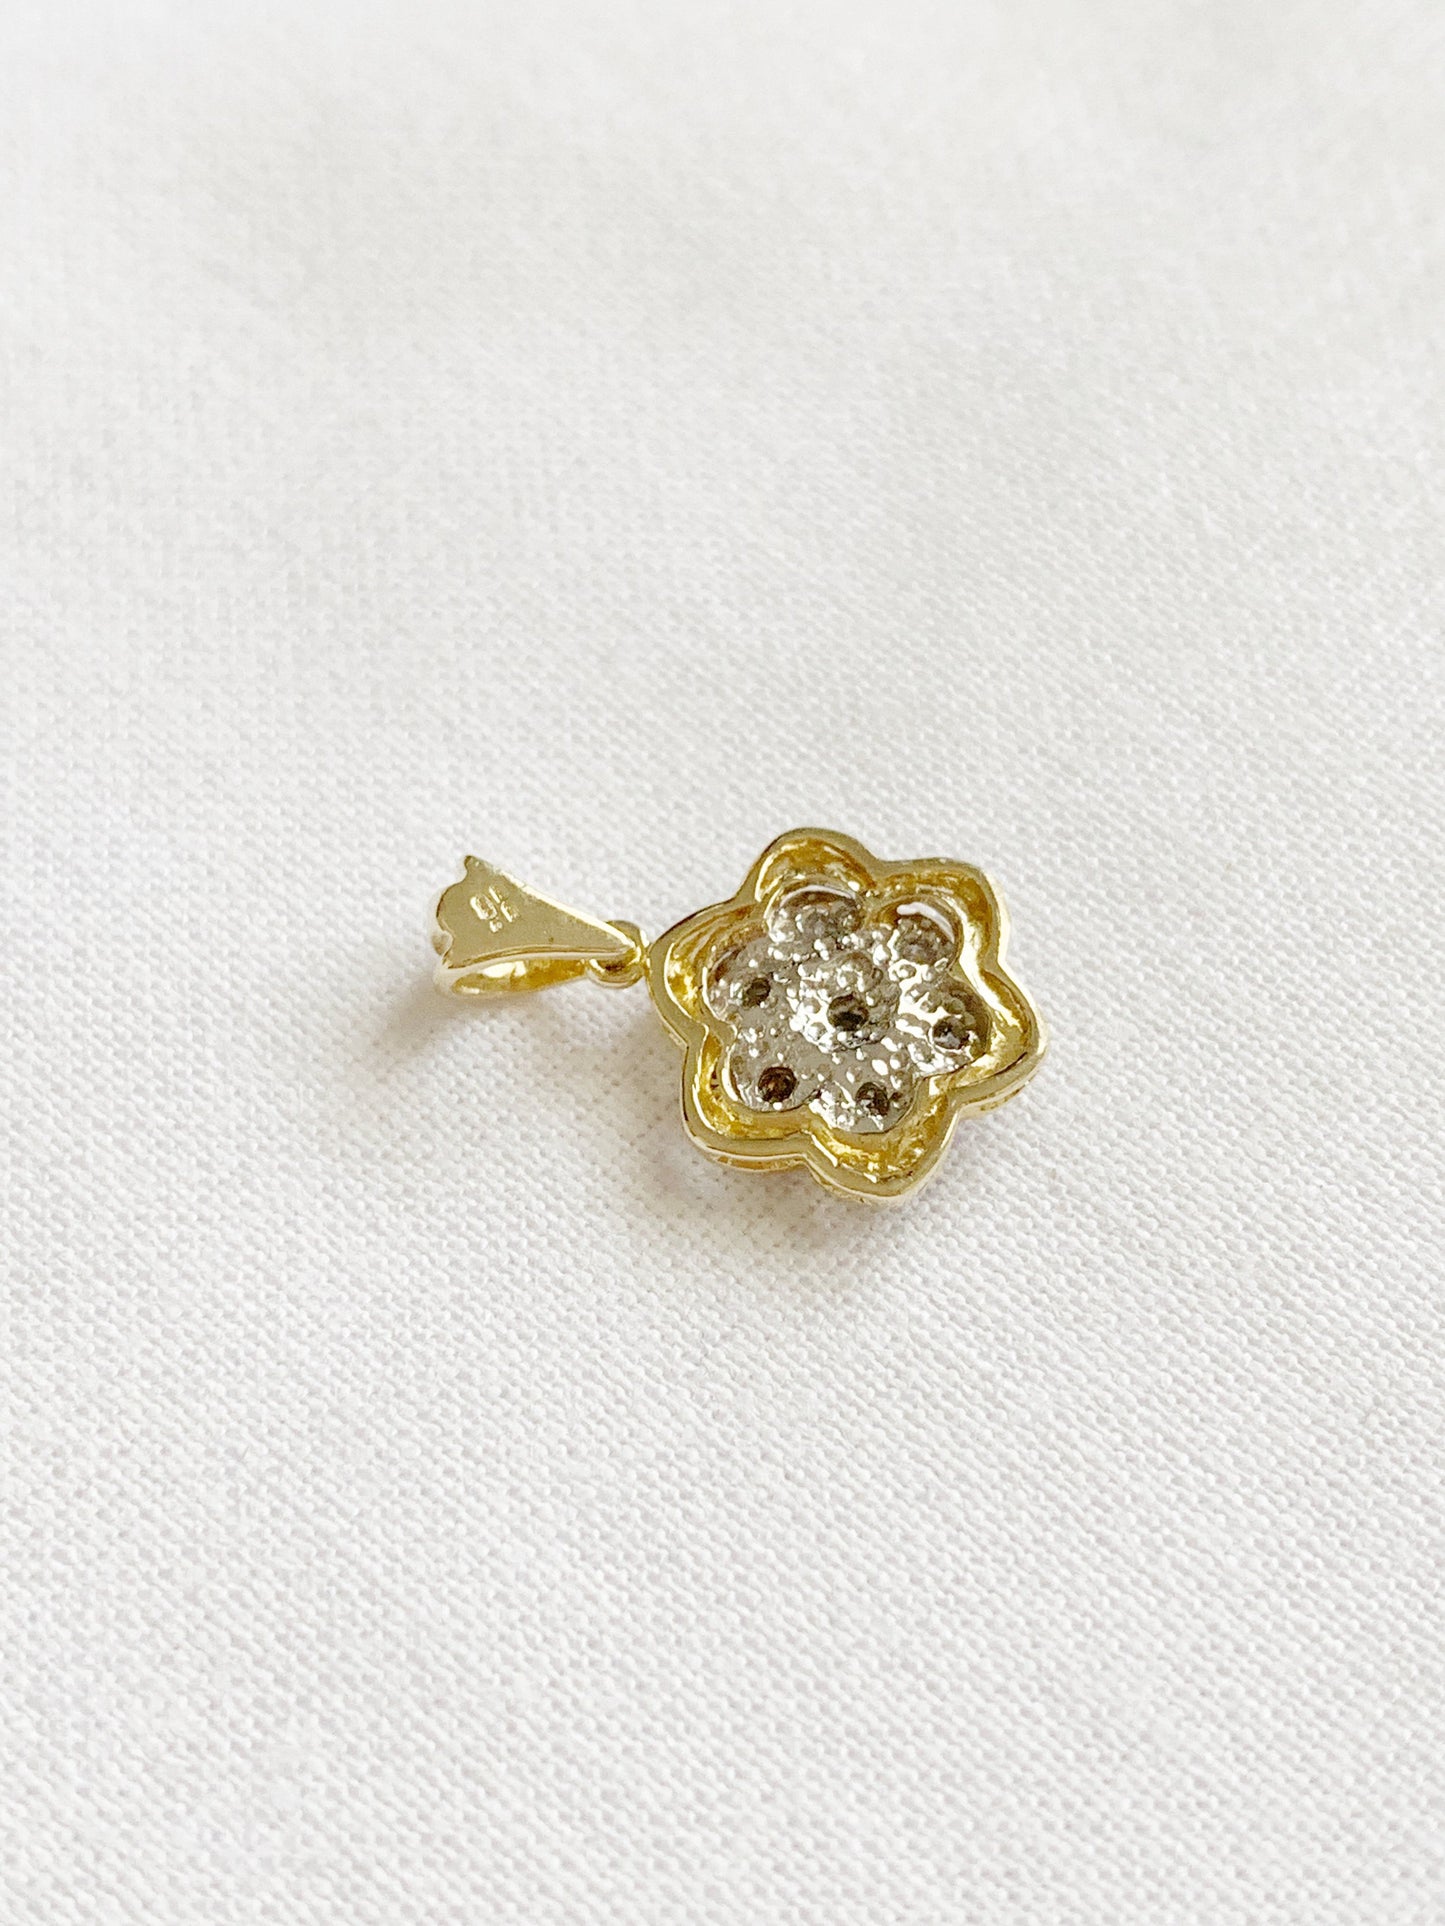 Vintage 9ct Gold and Diamond Flower Pendant